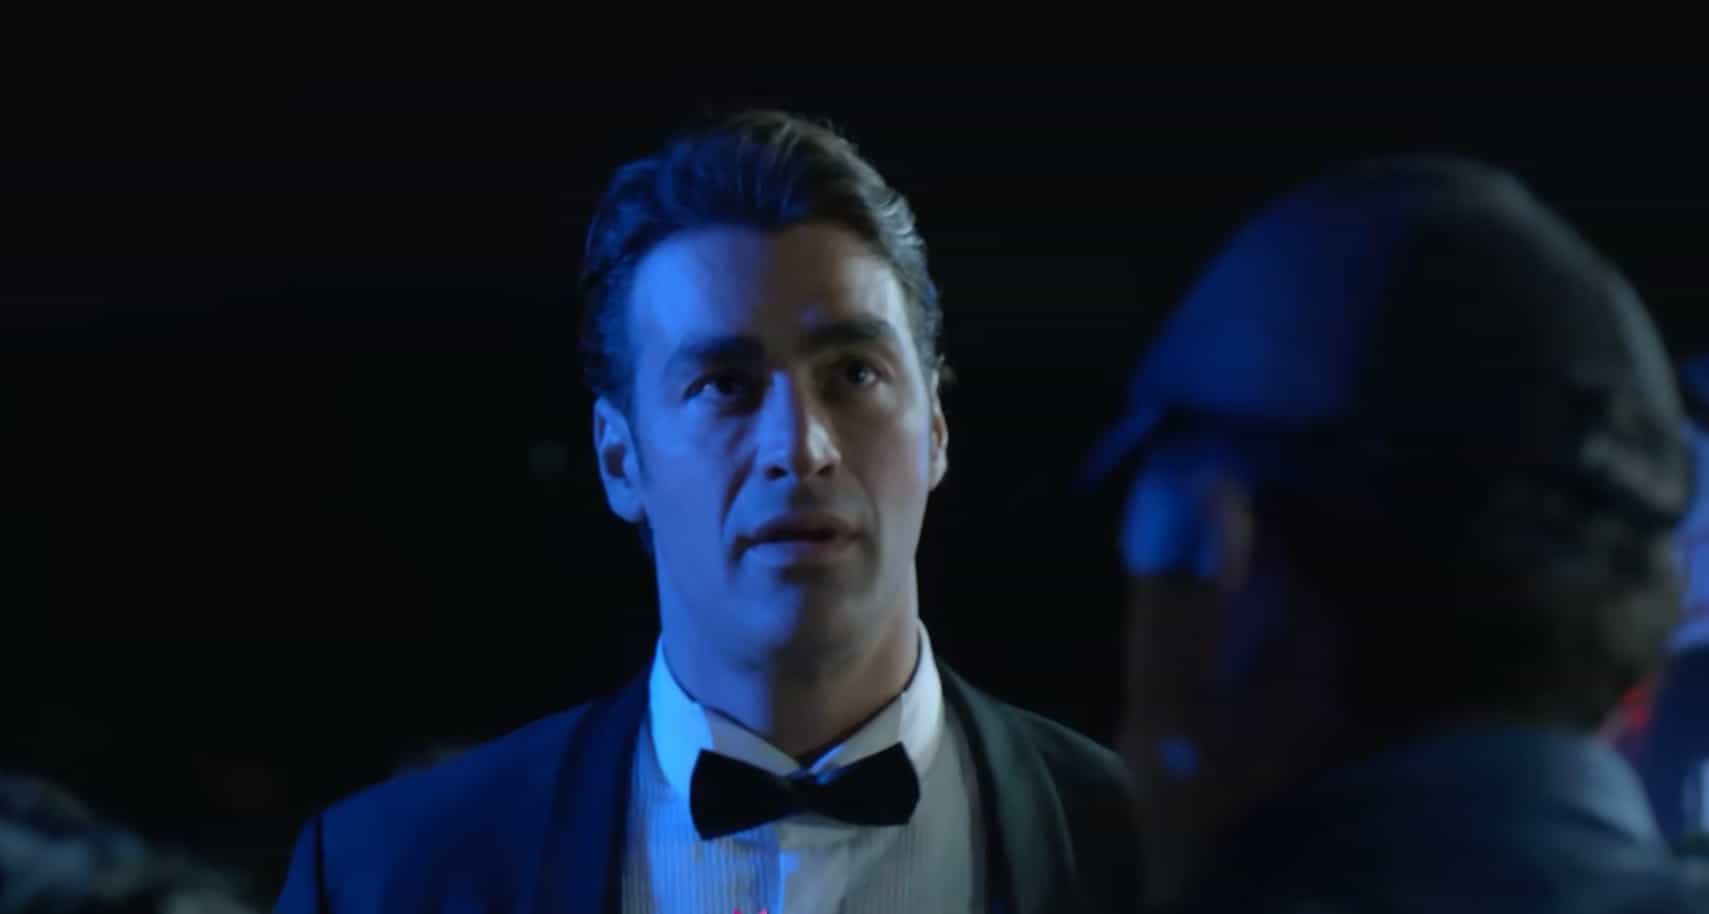 Sarp Levendoglu as Ahmet from the series.